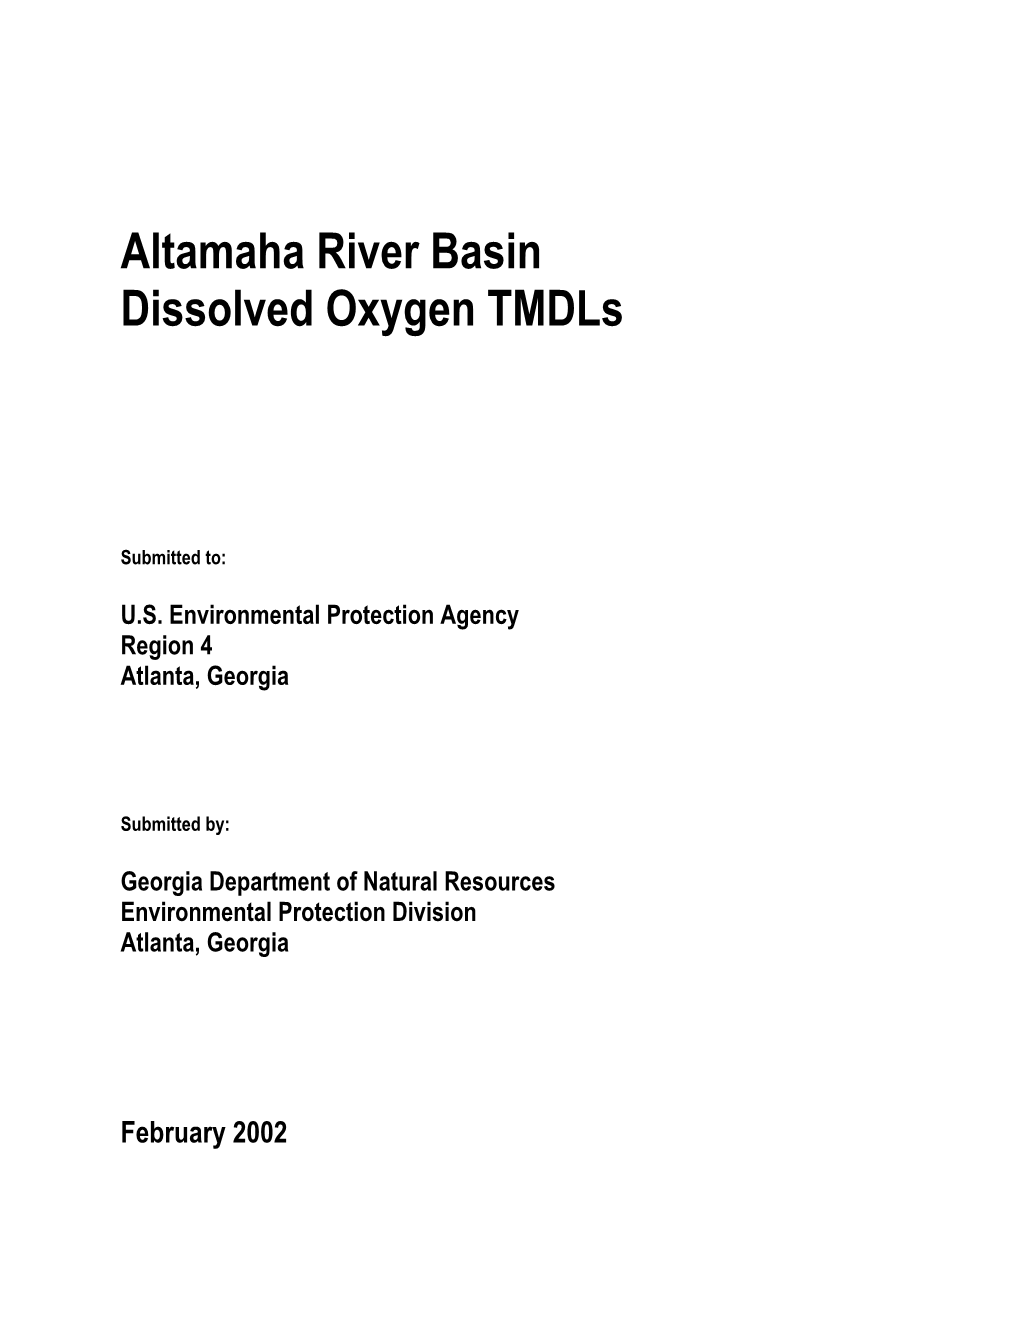 Altamaha River Basin Dissolved Oxygen Tmdls